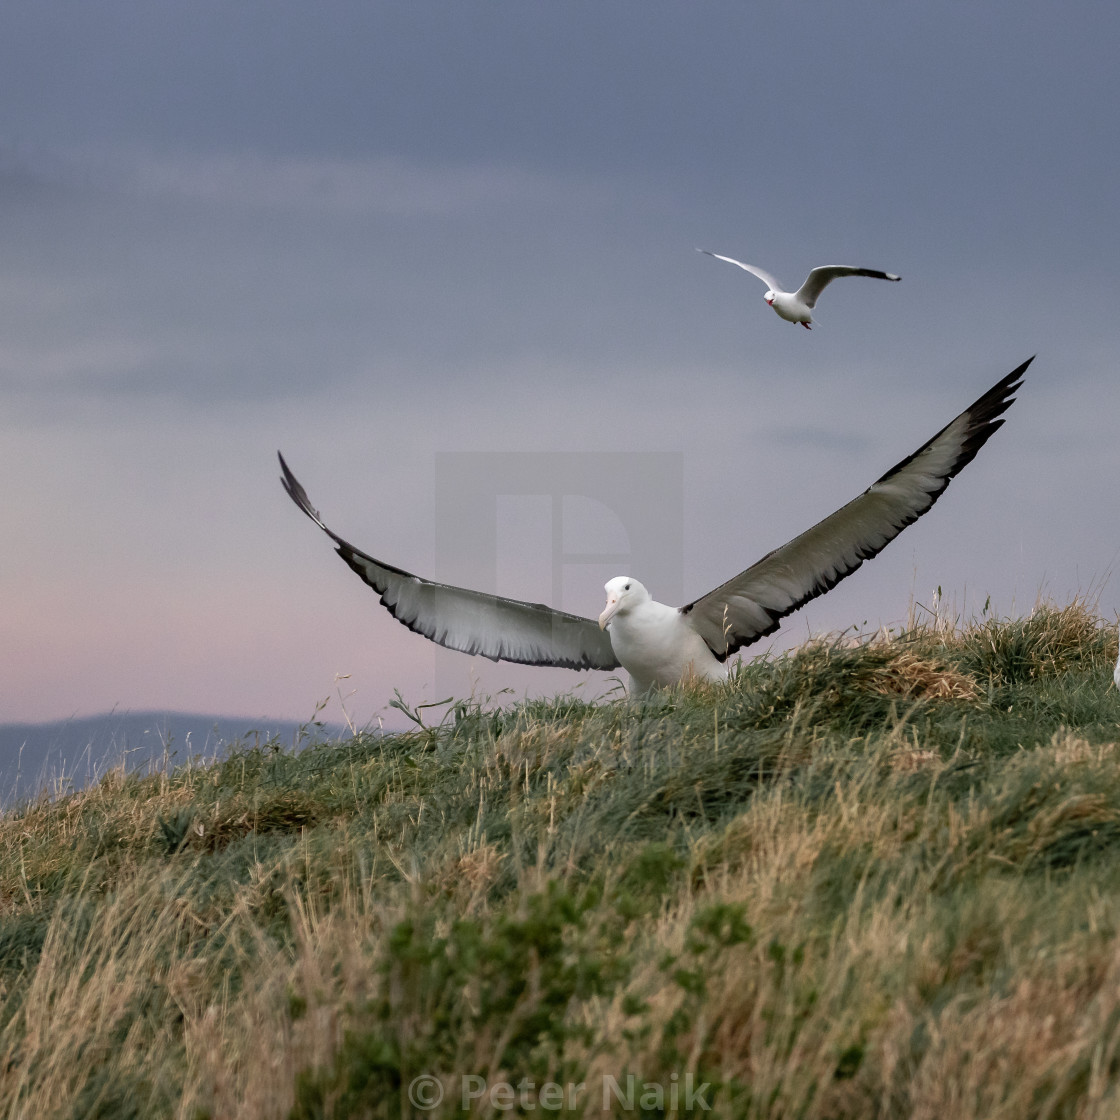 "Northern Royal Albatross takeoff" stock image